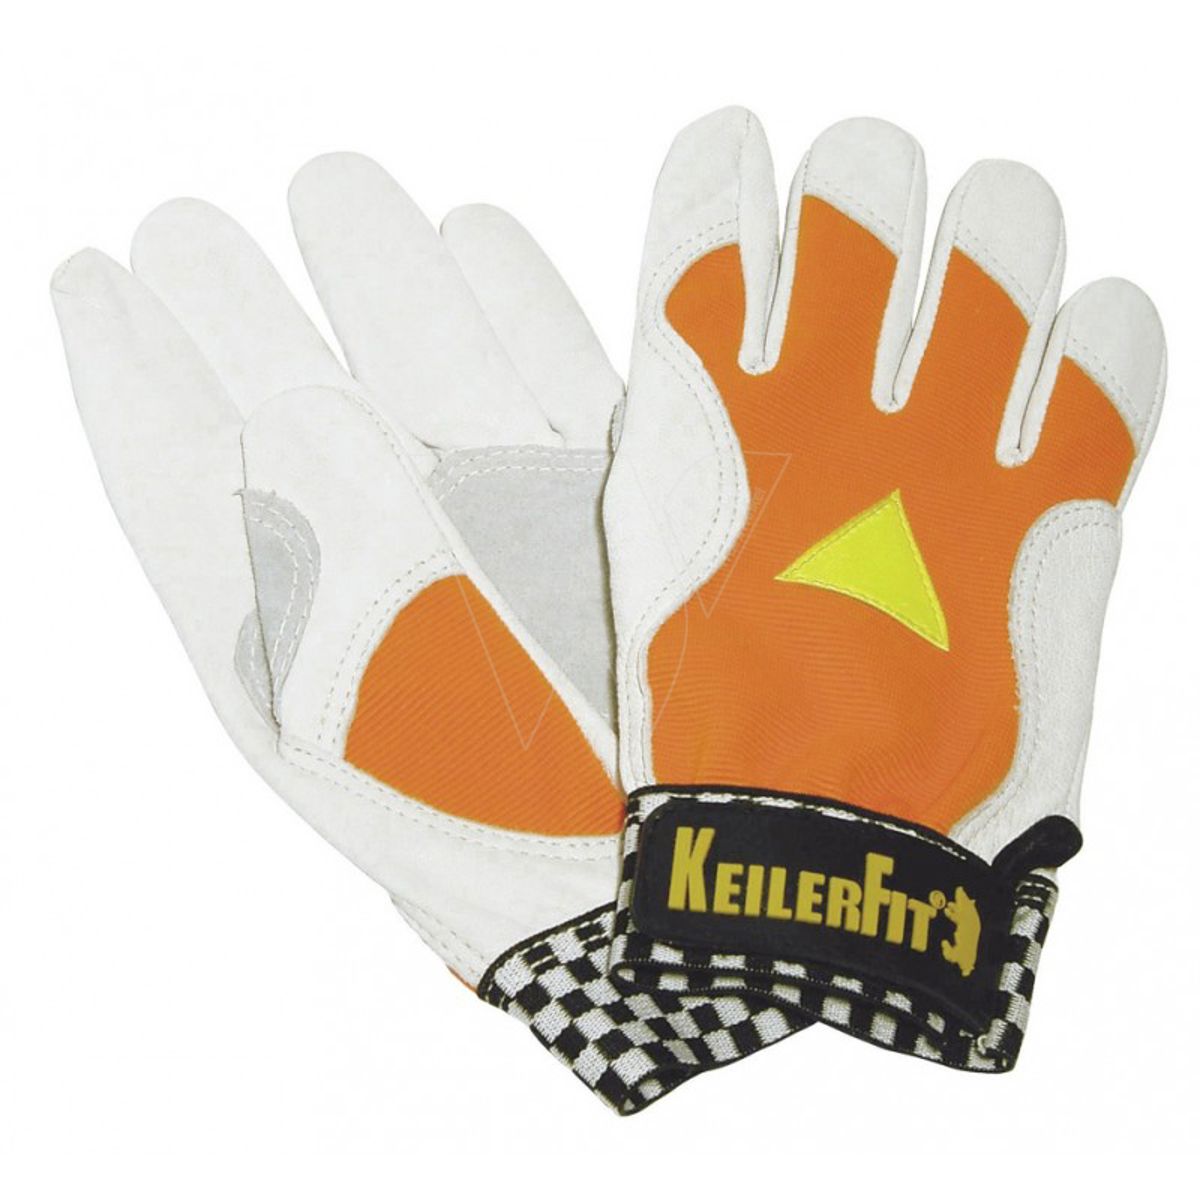 Keilerfit work glove nappa leather 11